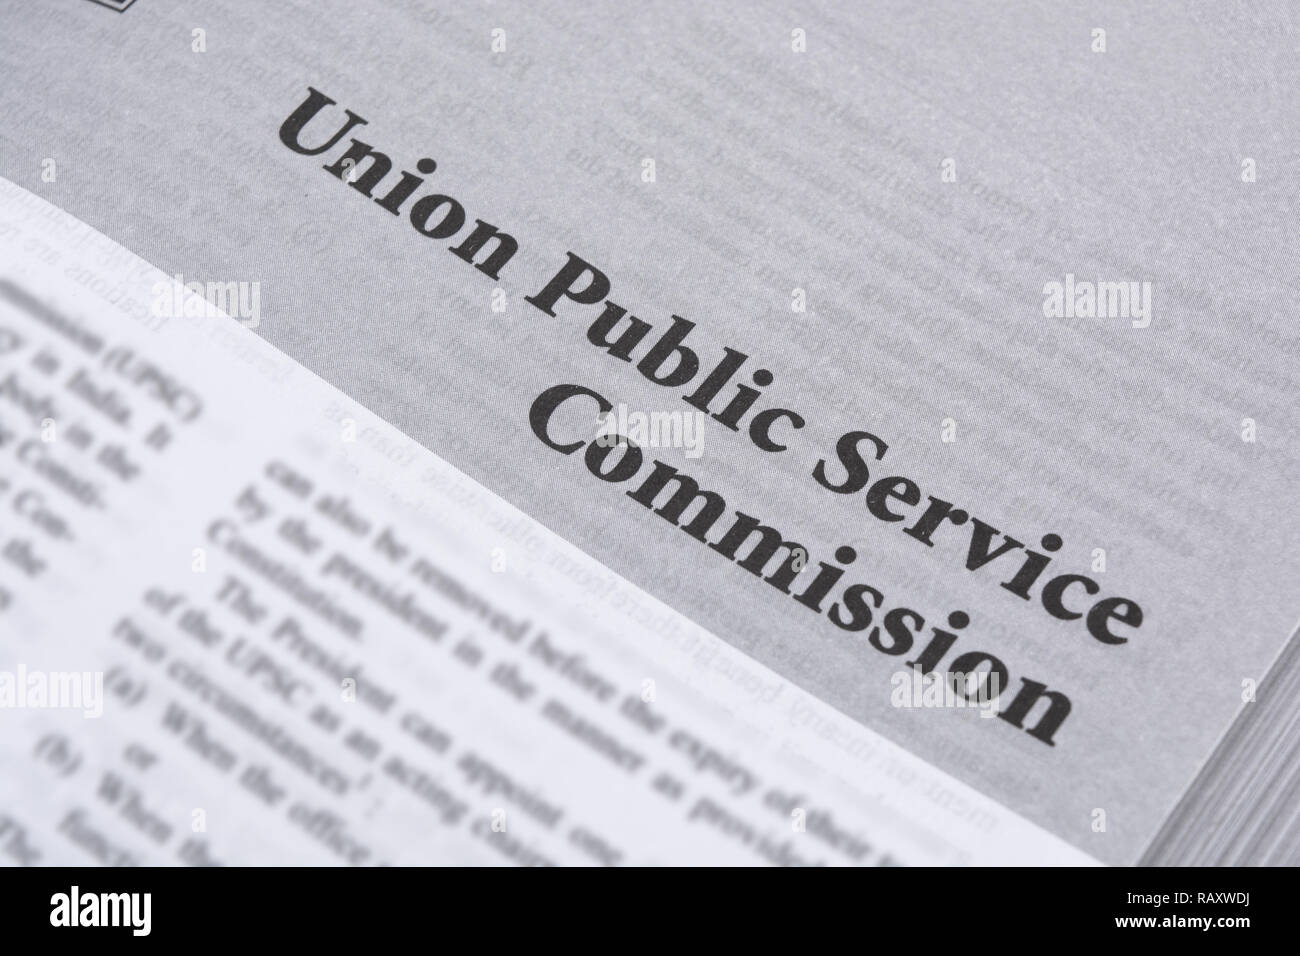 Maski,Karnataka,India - January 4,2019 : Union Public Service Commission printed in book with large letters. Stock Photo